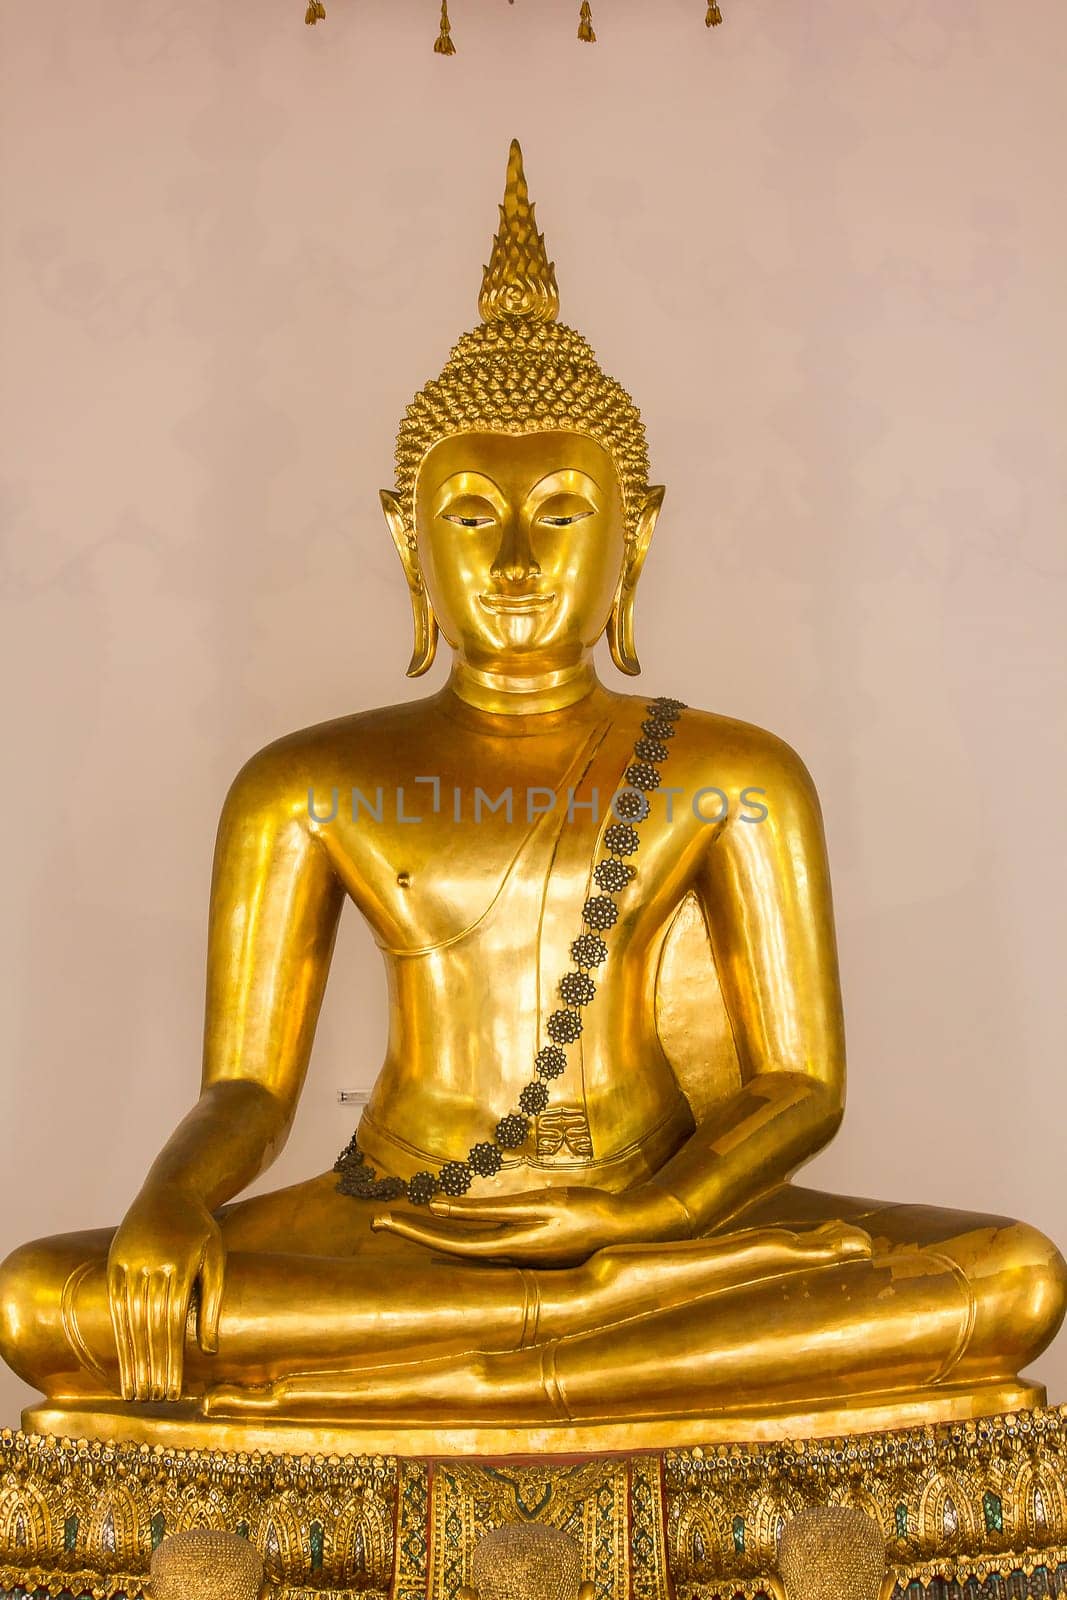 The Golden Buddha is beautiful that Buddhists worship.